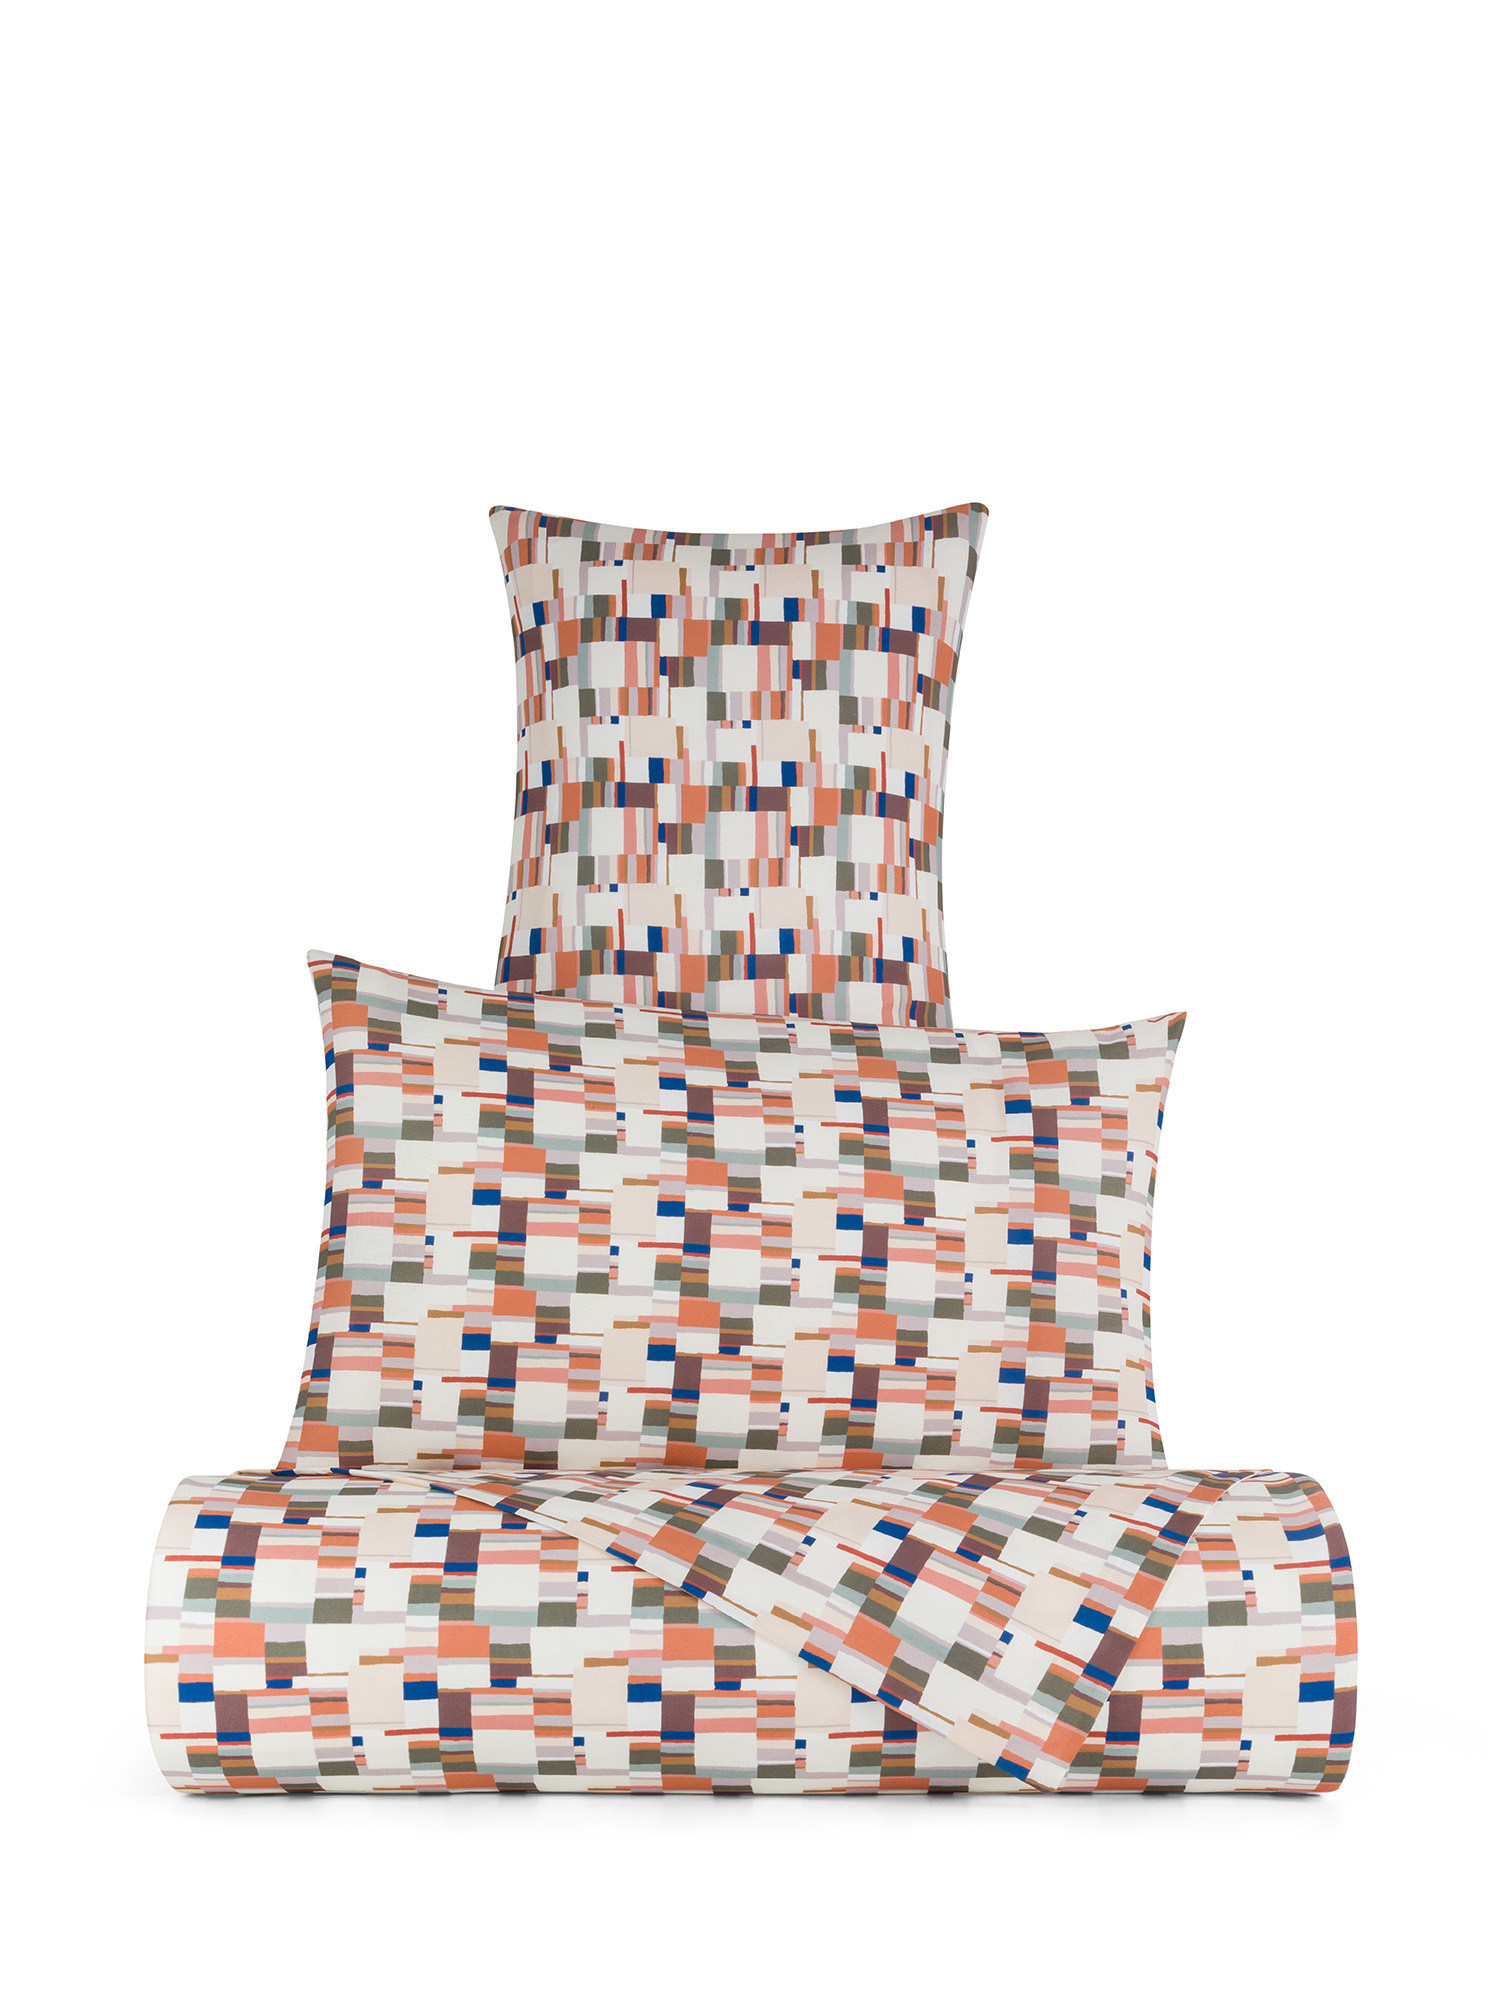 Geometric patterned cotton duvet cover set, Multicolor, large image number 0